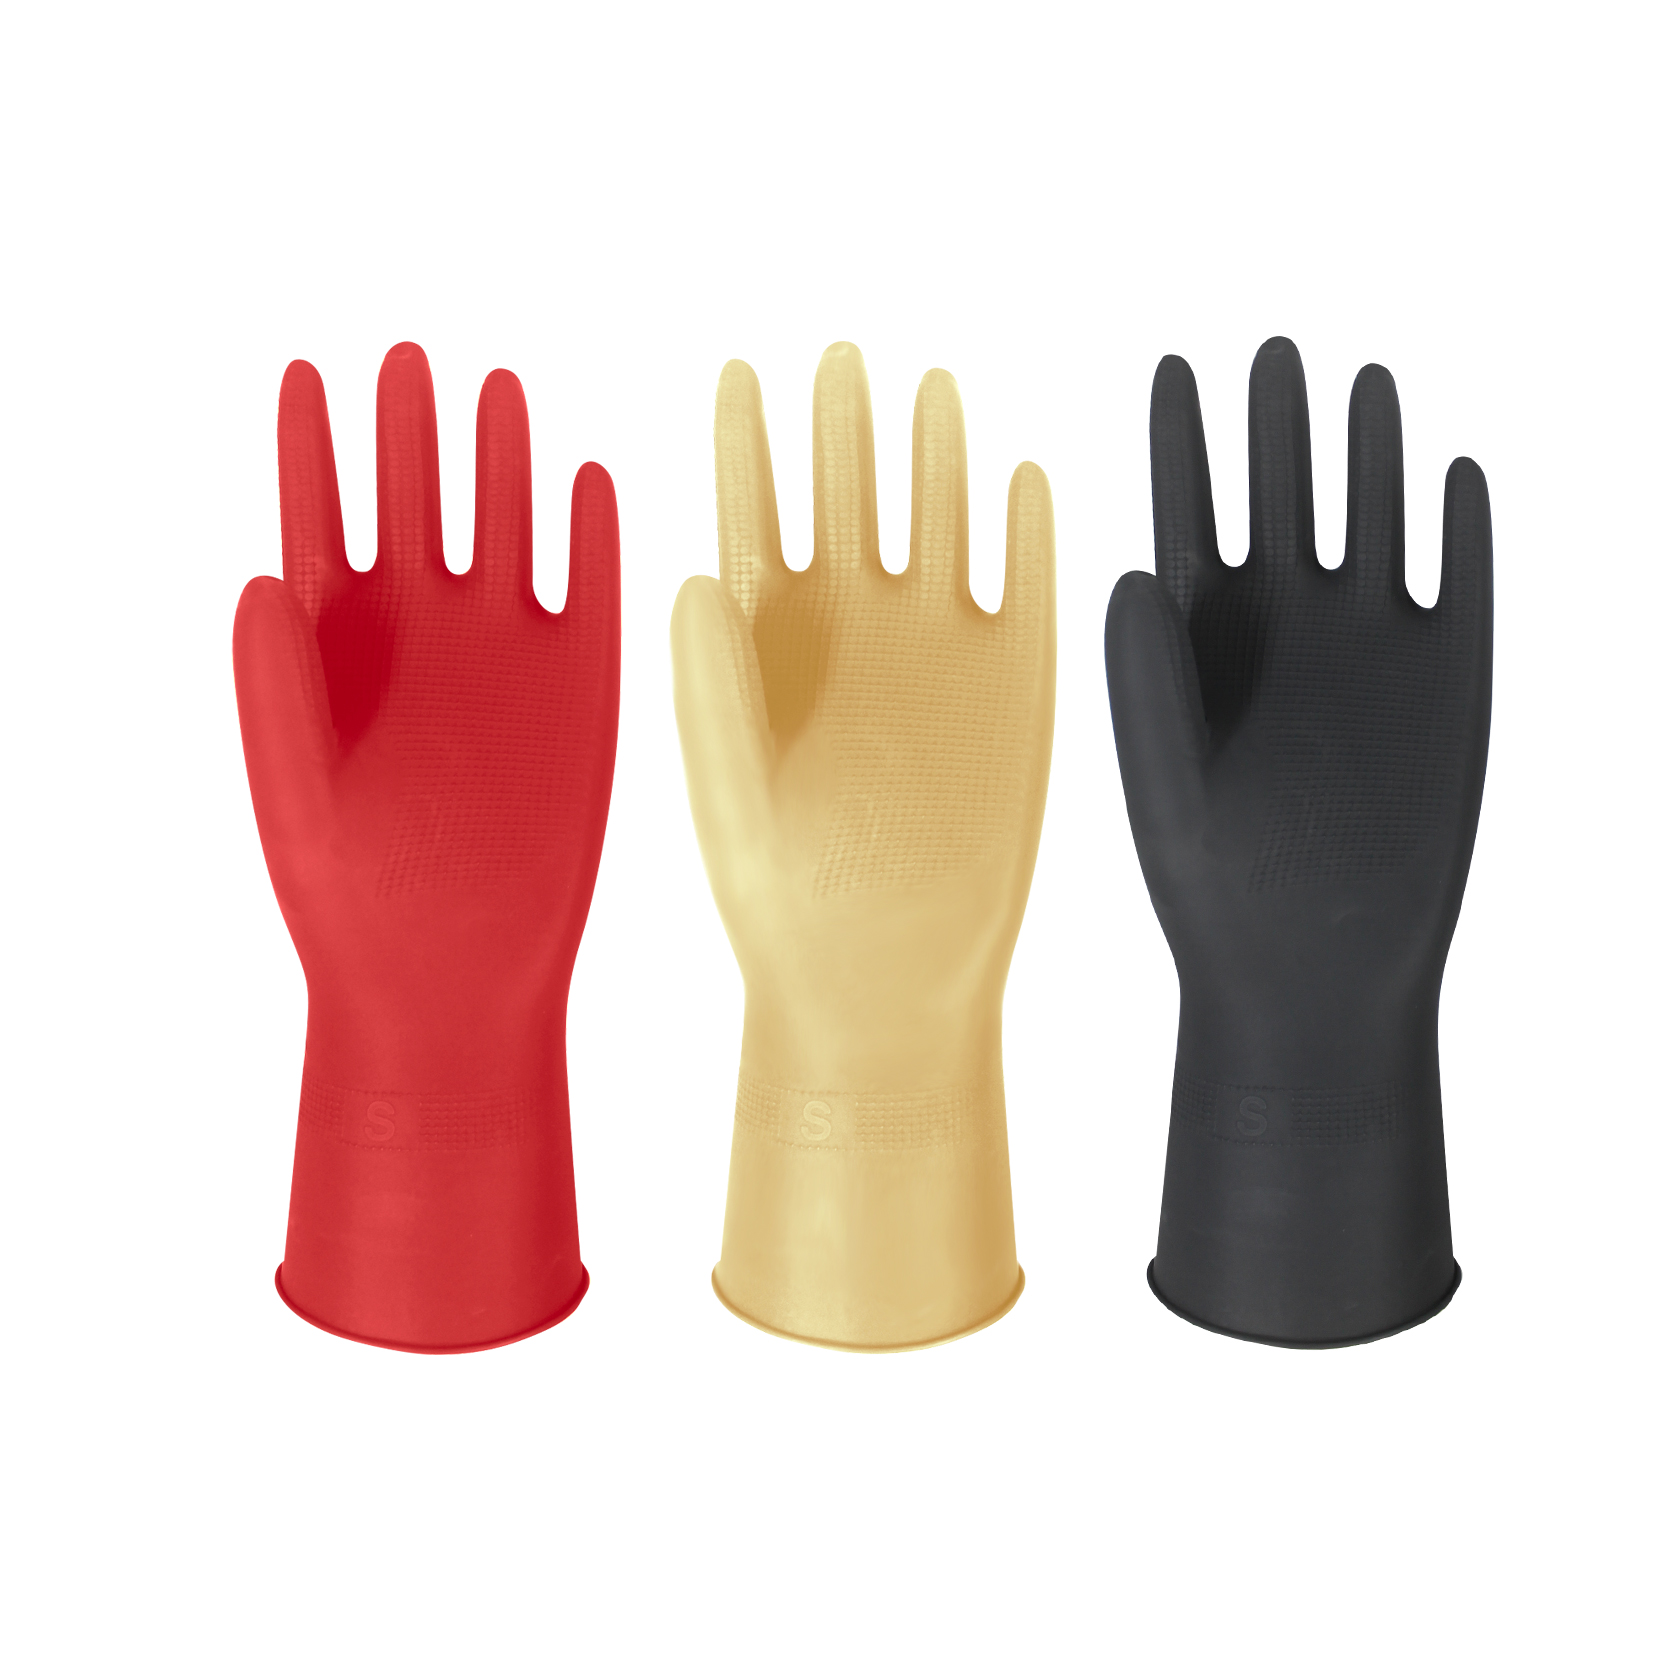 Latex Household Rolled Cuff Gloves አጭር የጎማ ጓንቶች የእቃ ማጠቢያ ጓንቶችን ለማጽዳት